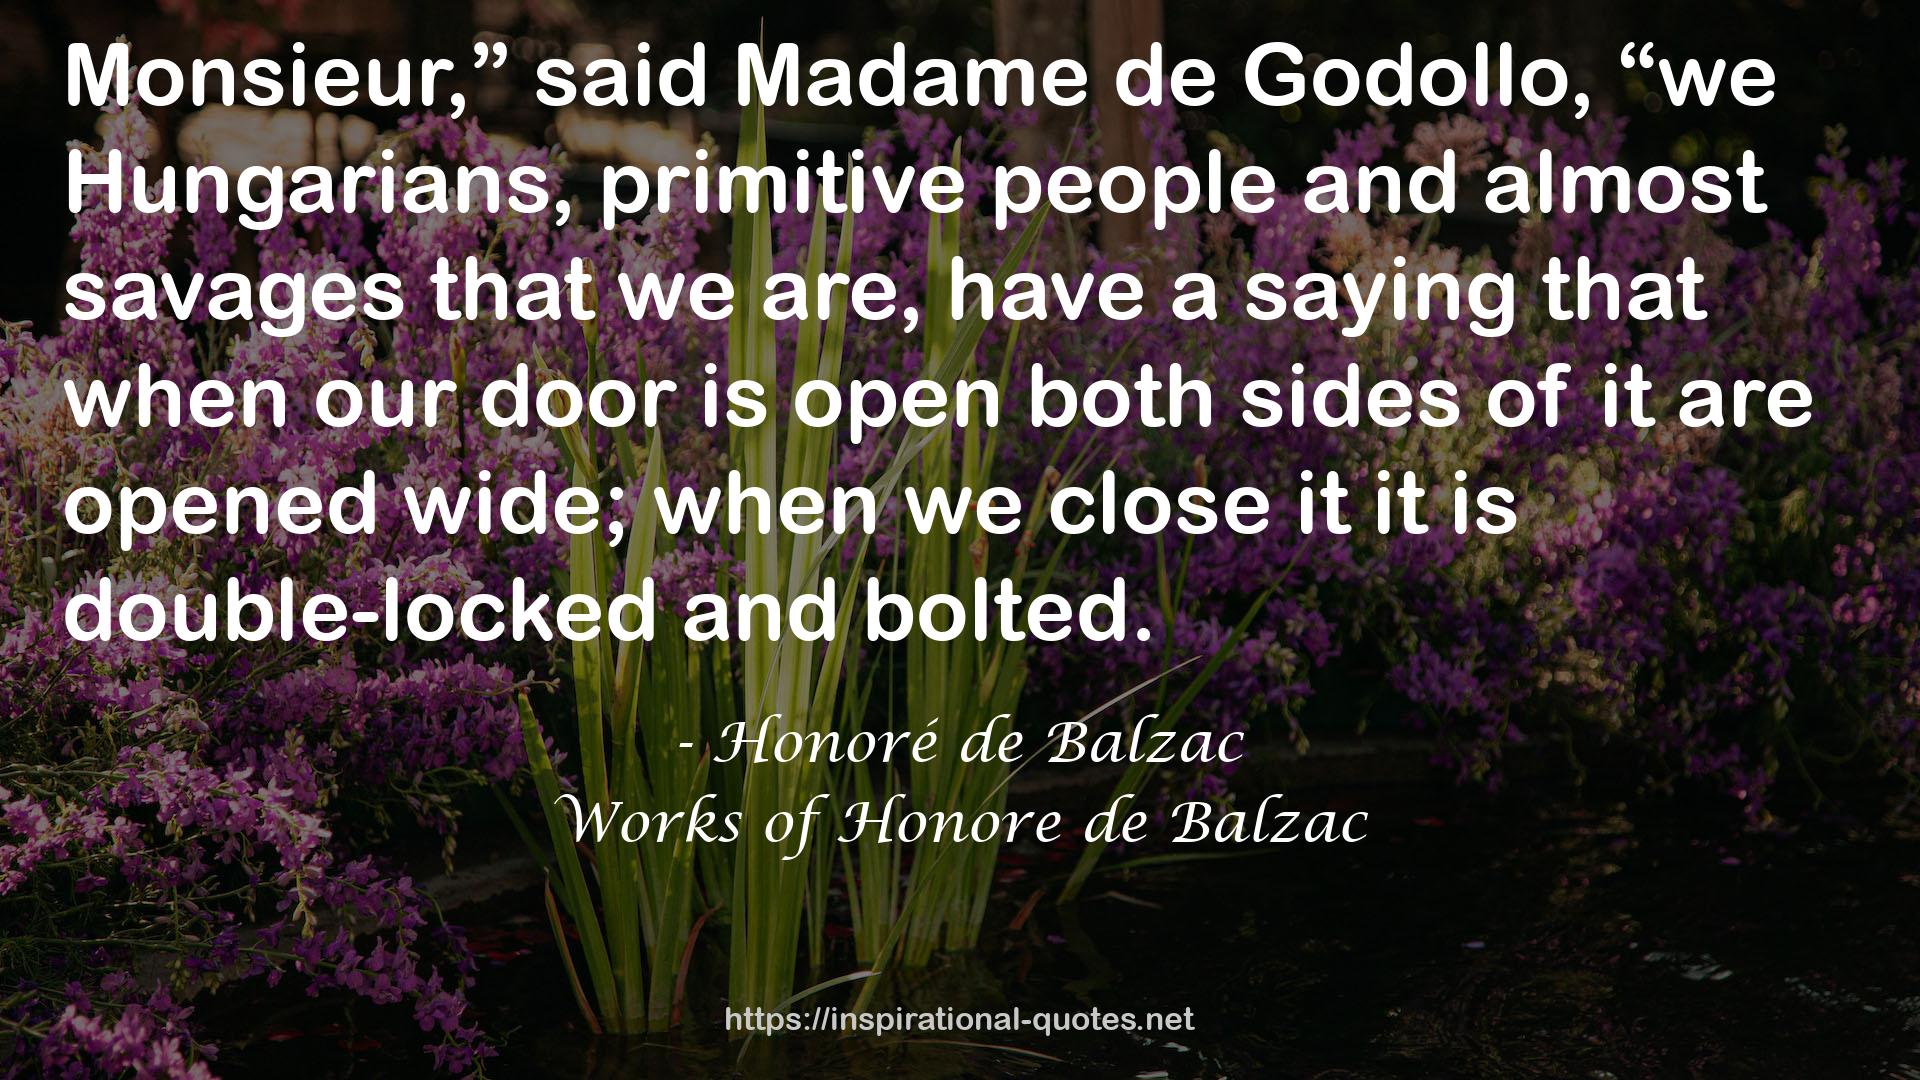 Works of Honore de Balzac QUOTES